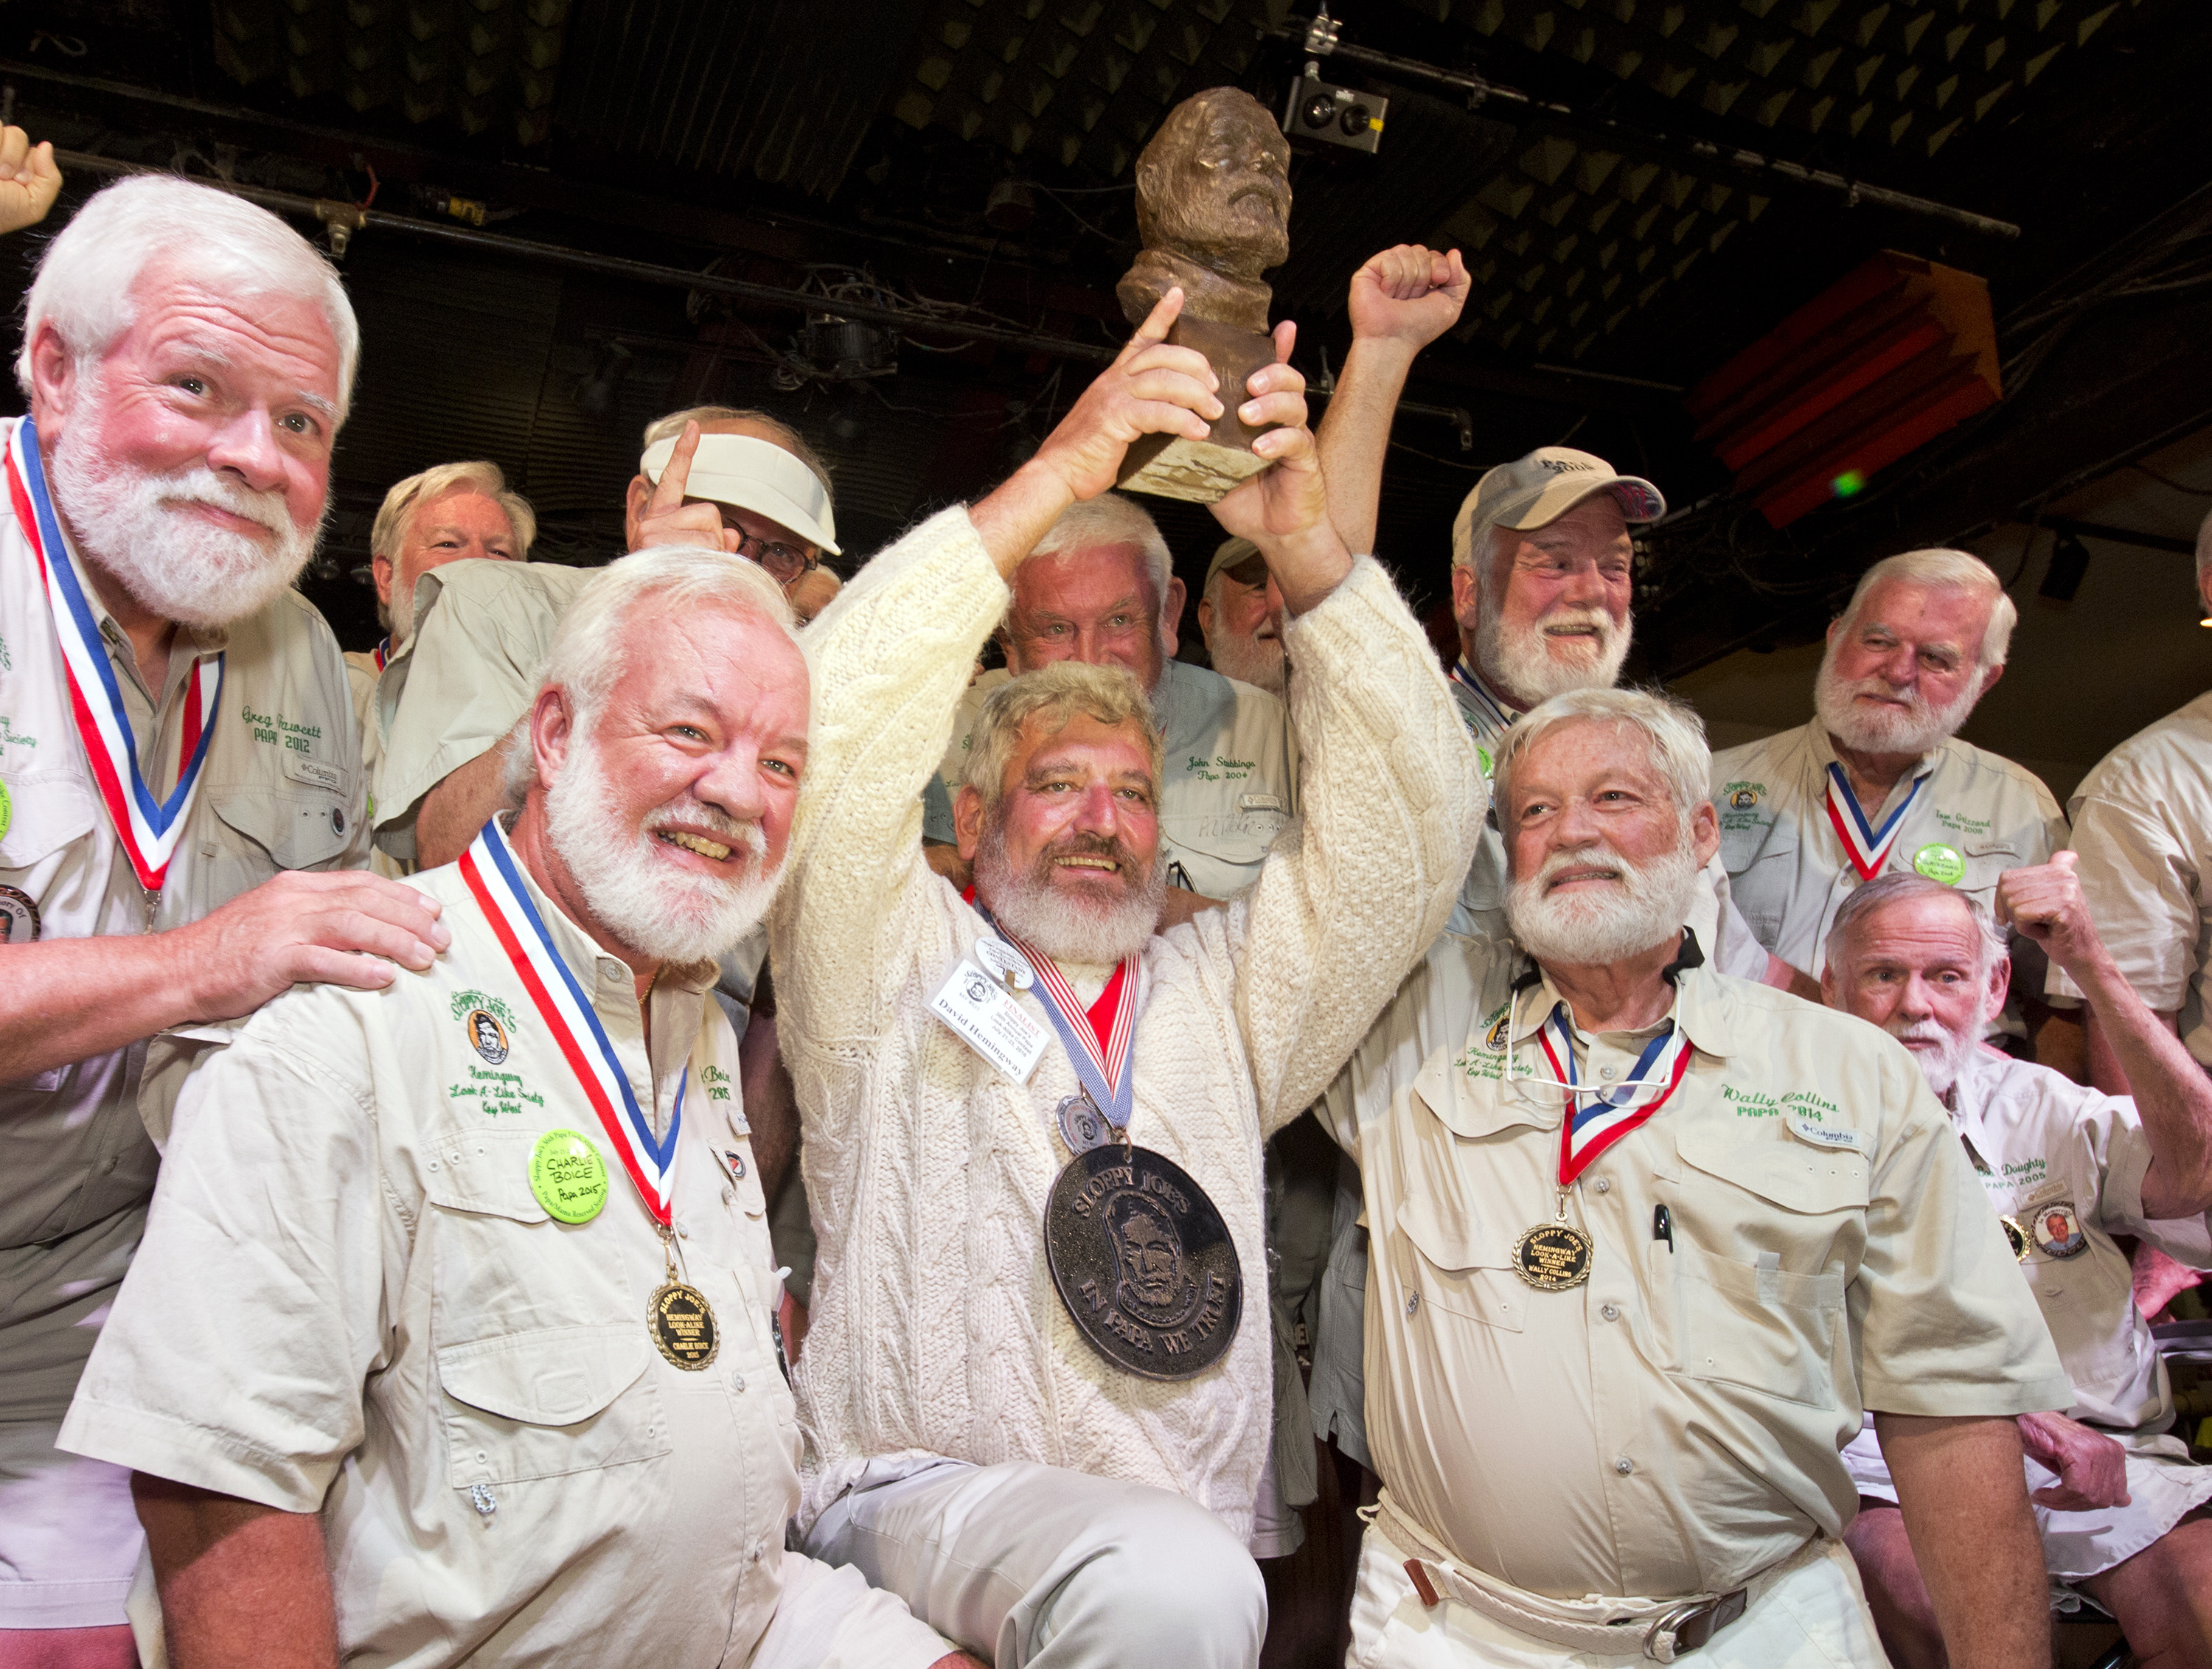 Hemingway wins annual Hemingway look-alike contest in Florida - CBS News